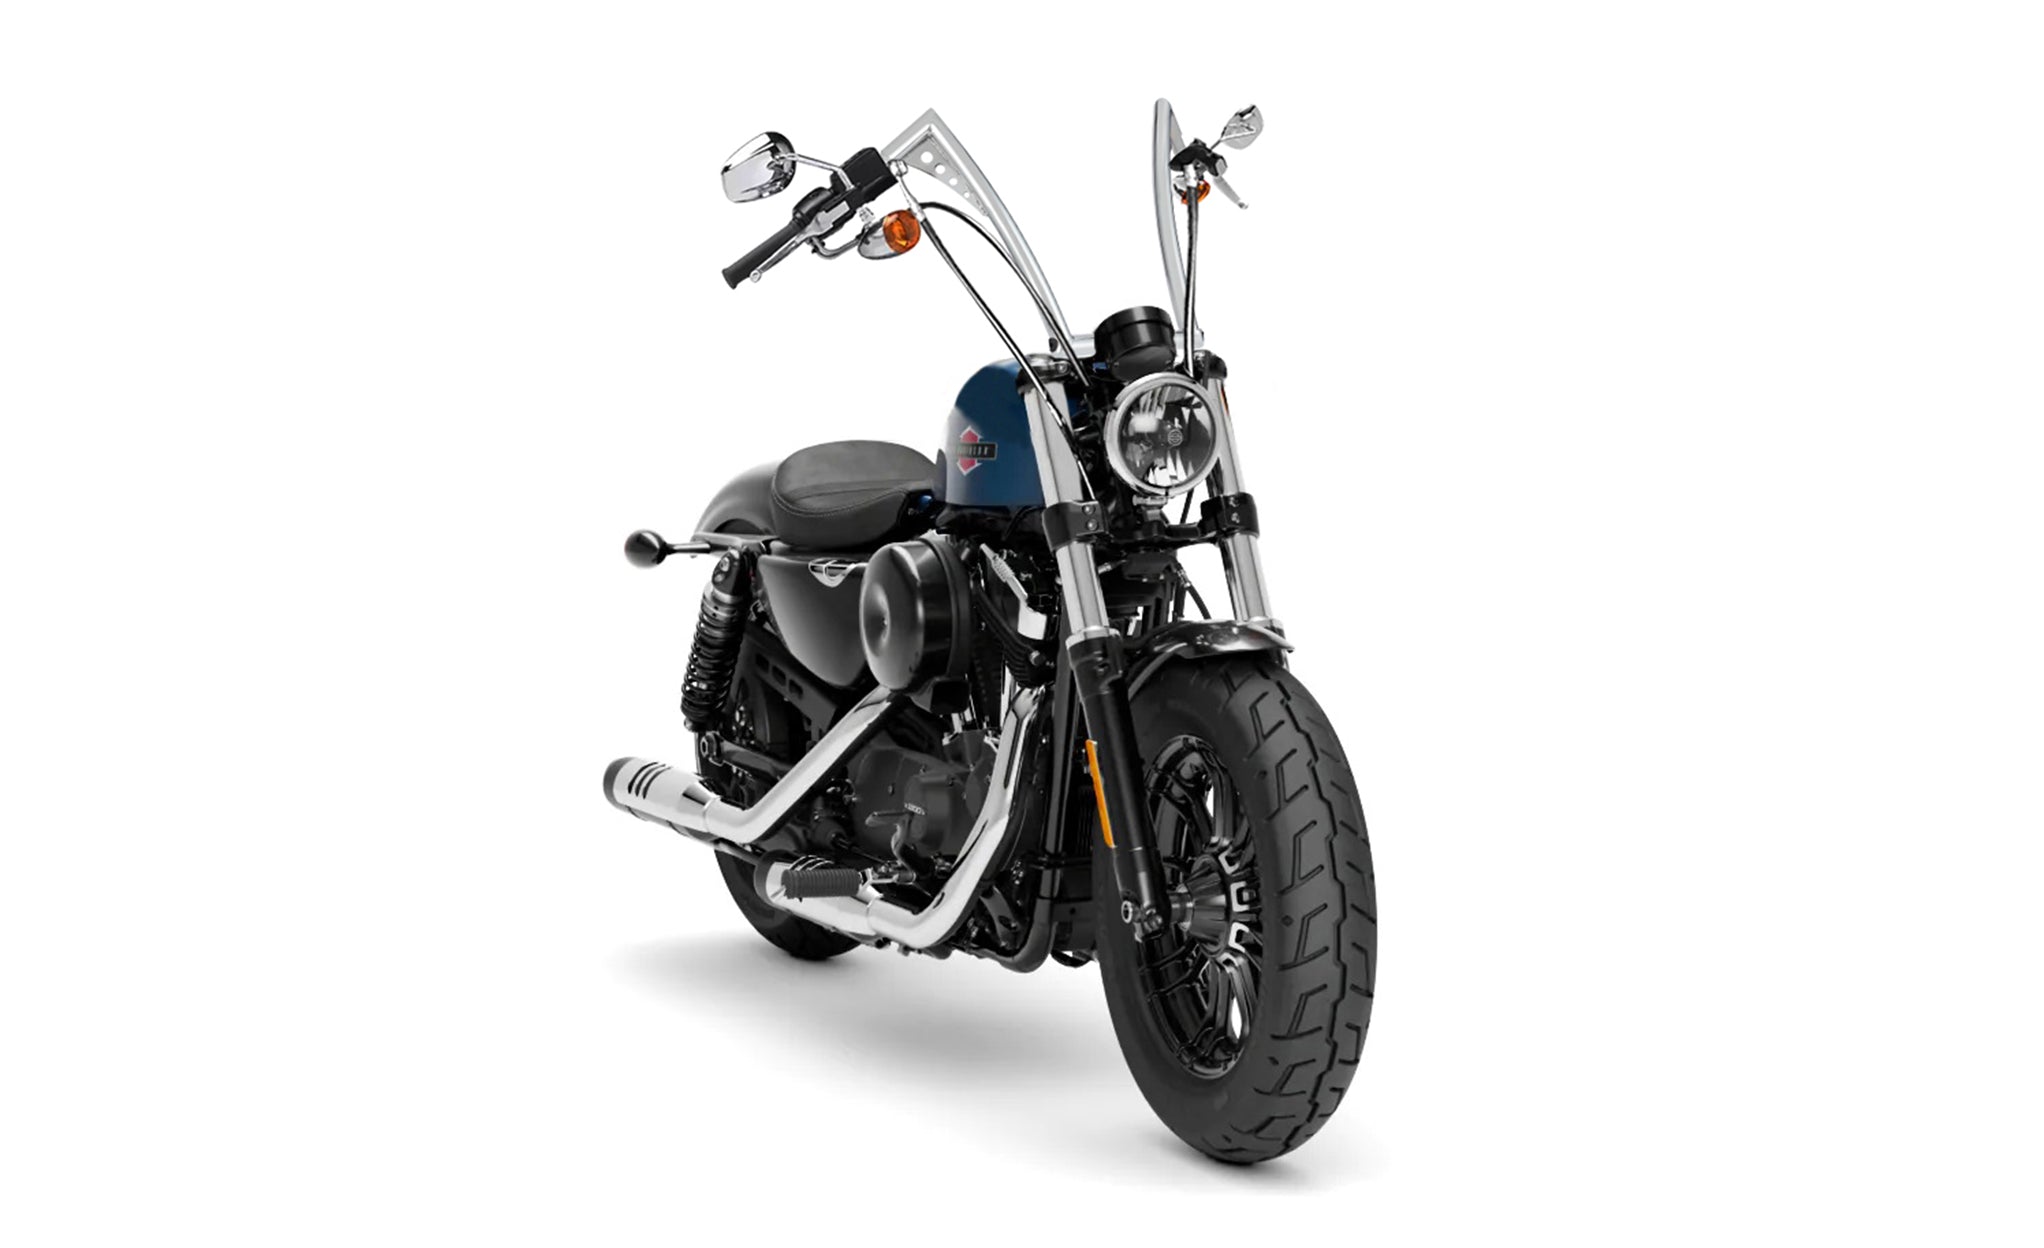 Viking Iron Born 12" Handlebar For Harley Sportster Forty Eight Chrome Bag on Bike View @expand